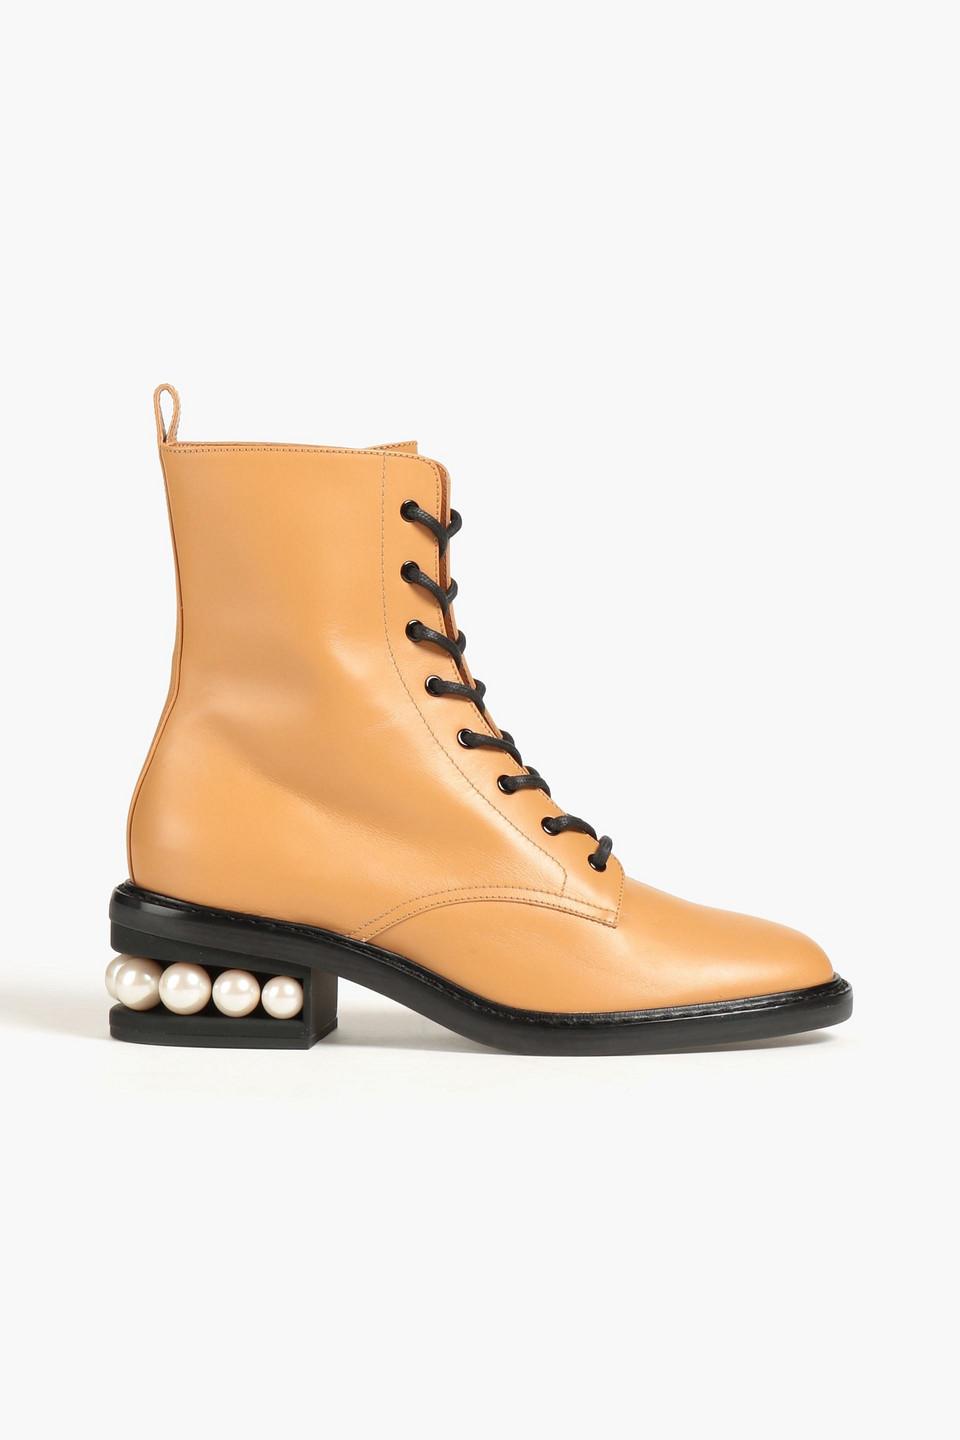 Nicholas Kirkwood, Shoes, Nicholas Kirkwood Casati Combat Boots